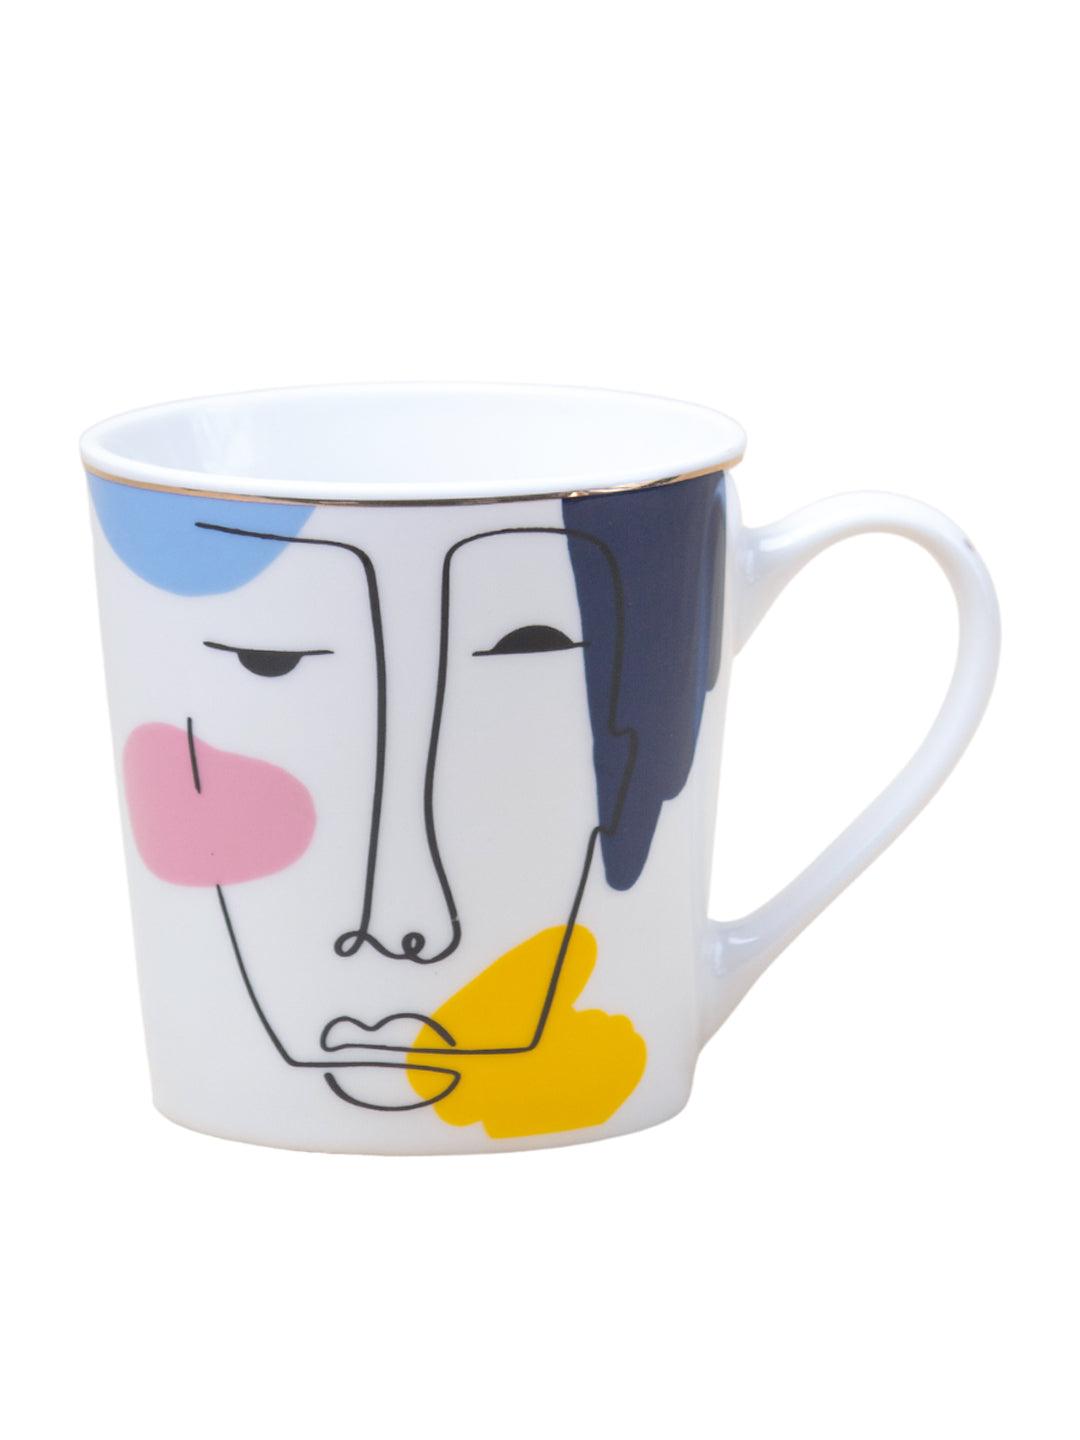 Multicolor Ceramic Coffee Mug 450 Ml - Face Sketch, Cups & Mugs - 4